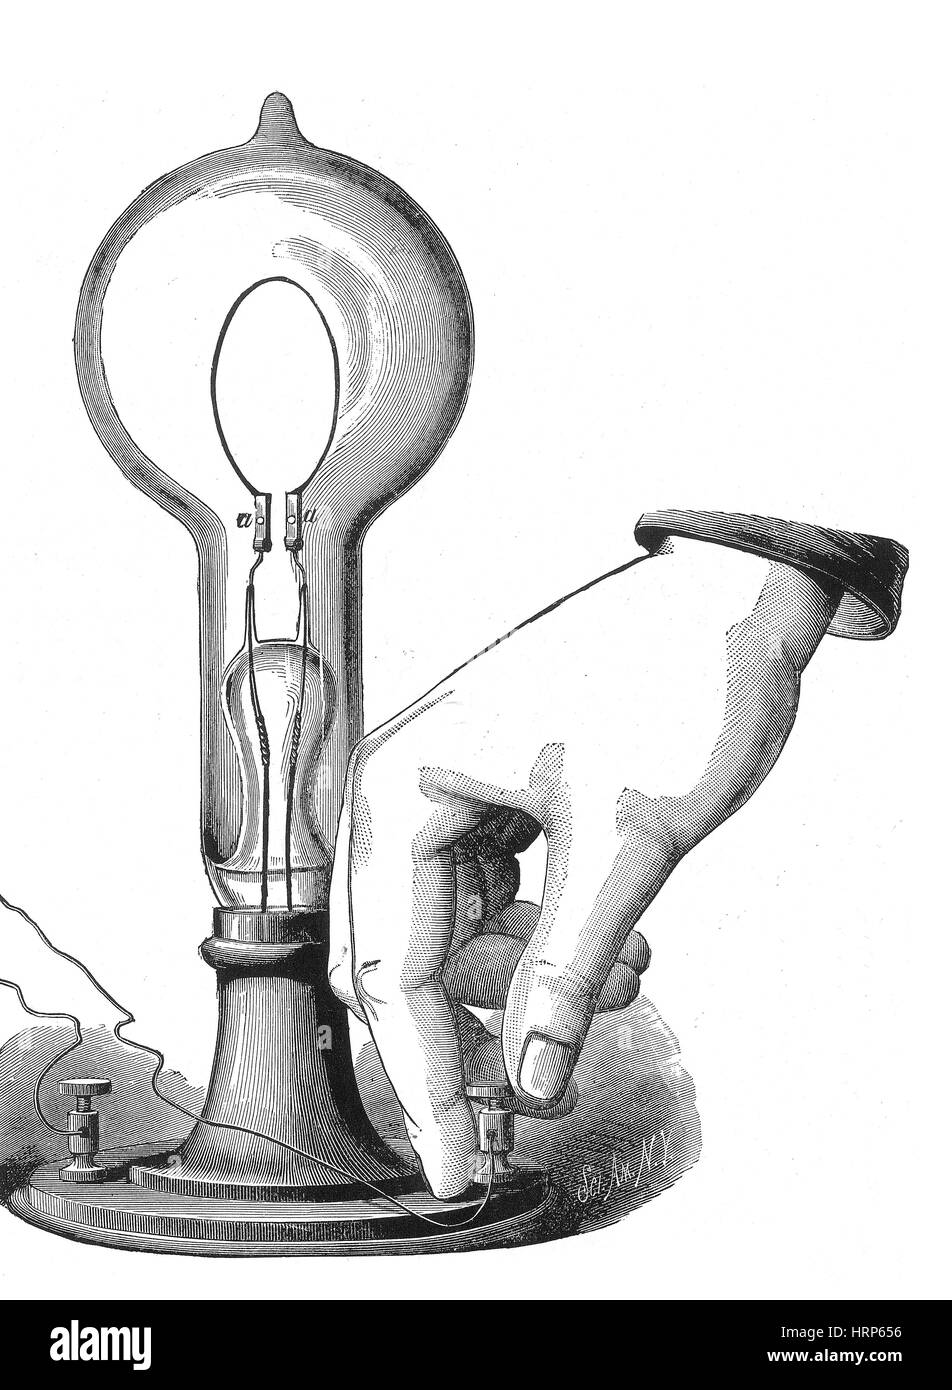 Thomas Edison, Incandescent Lamp, 1880 Stock Photo